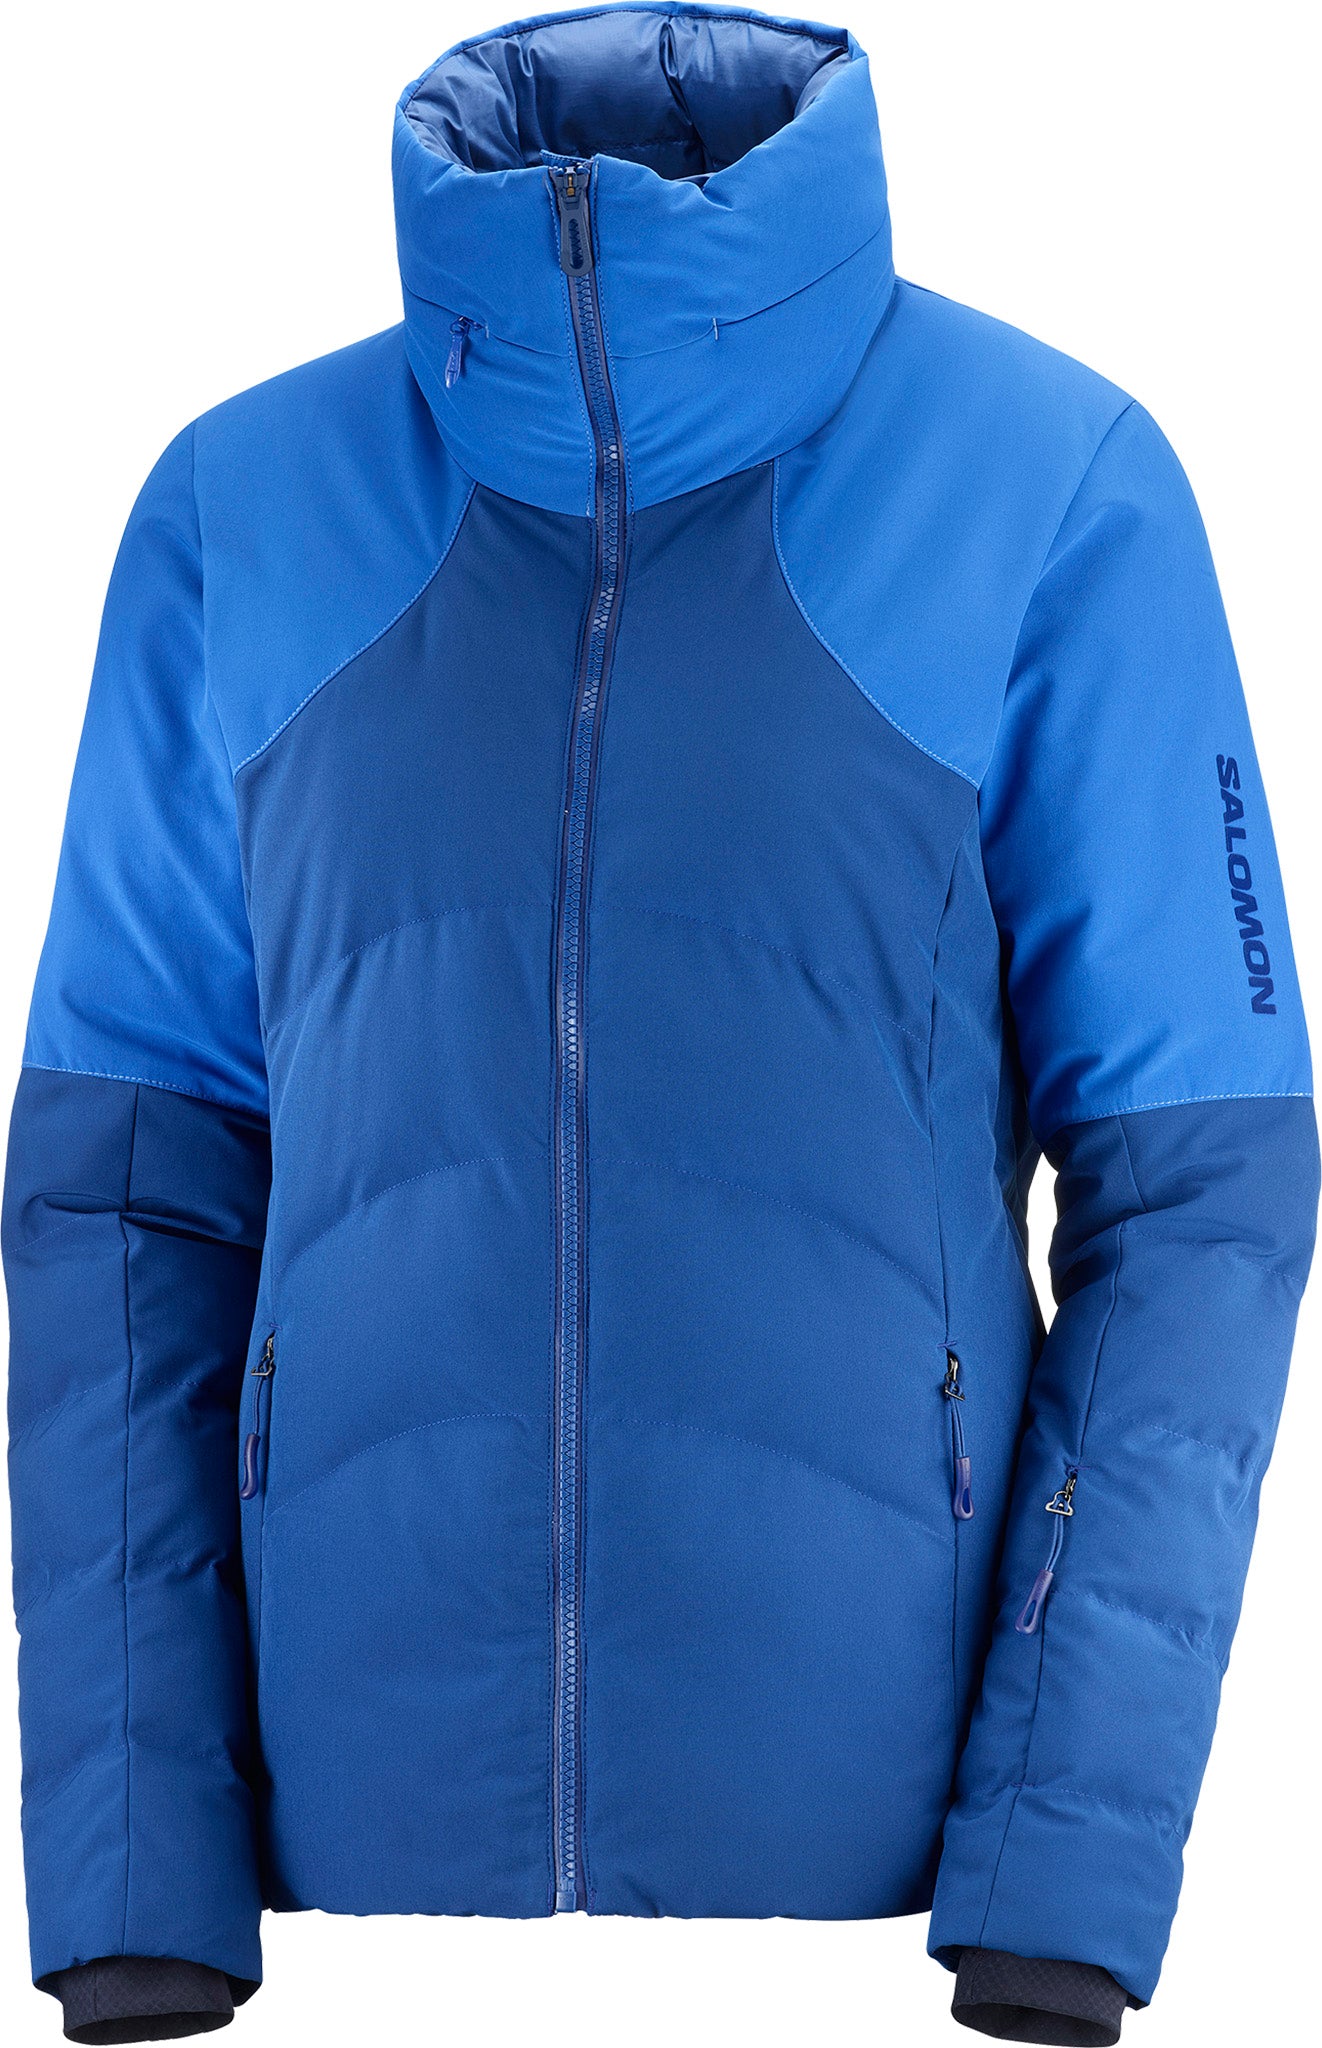 Salomon S/Max Warm Insulated Ski Jacket - Women's | Altitude Sports